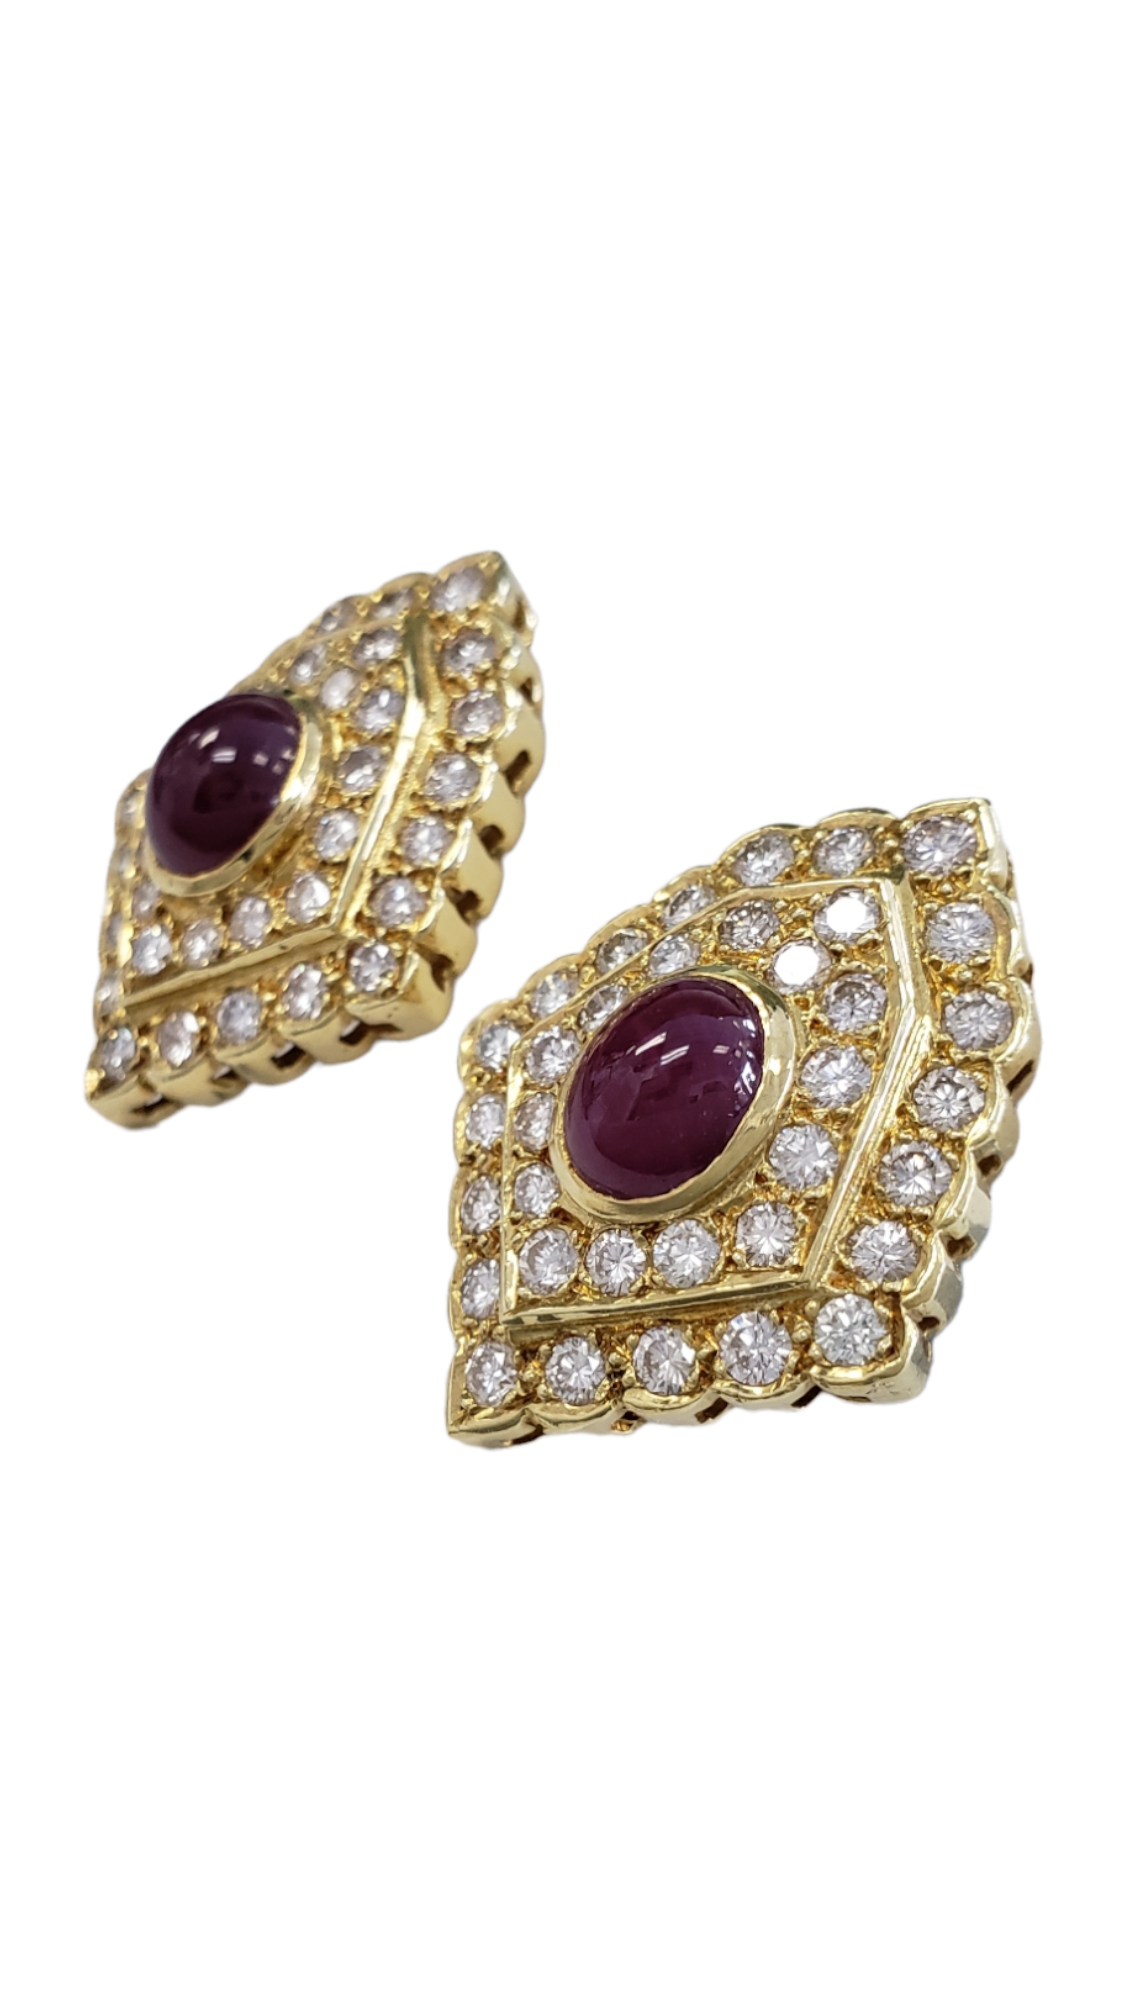 18K Yellow Gold Ruby and Diamond Women's Earrings